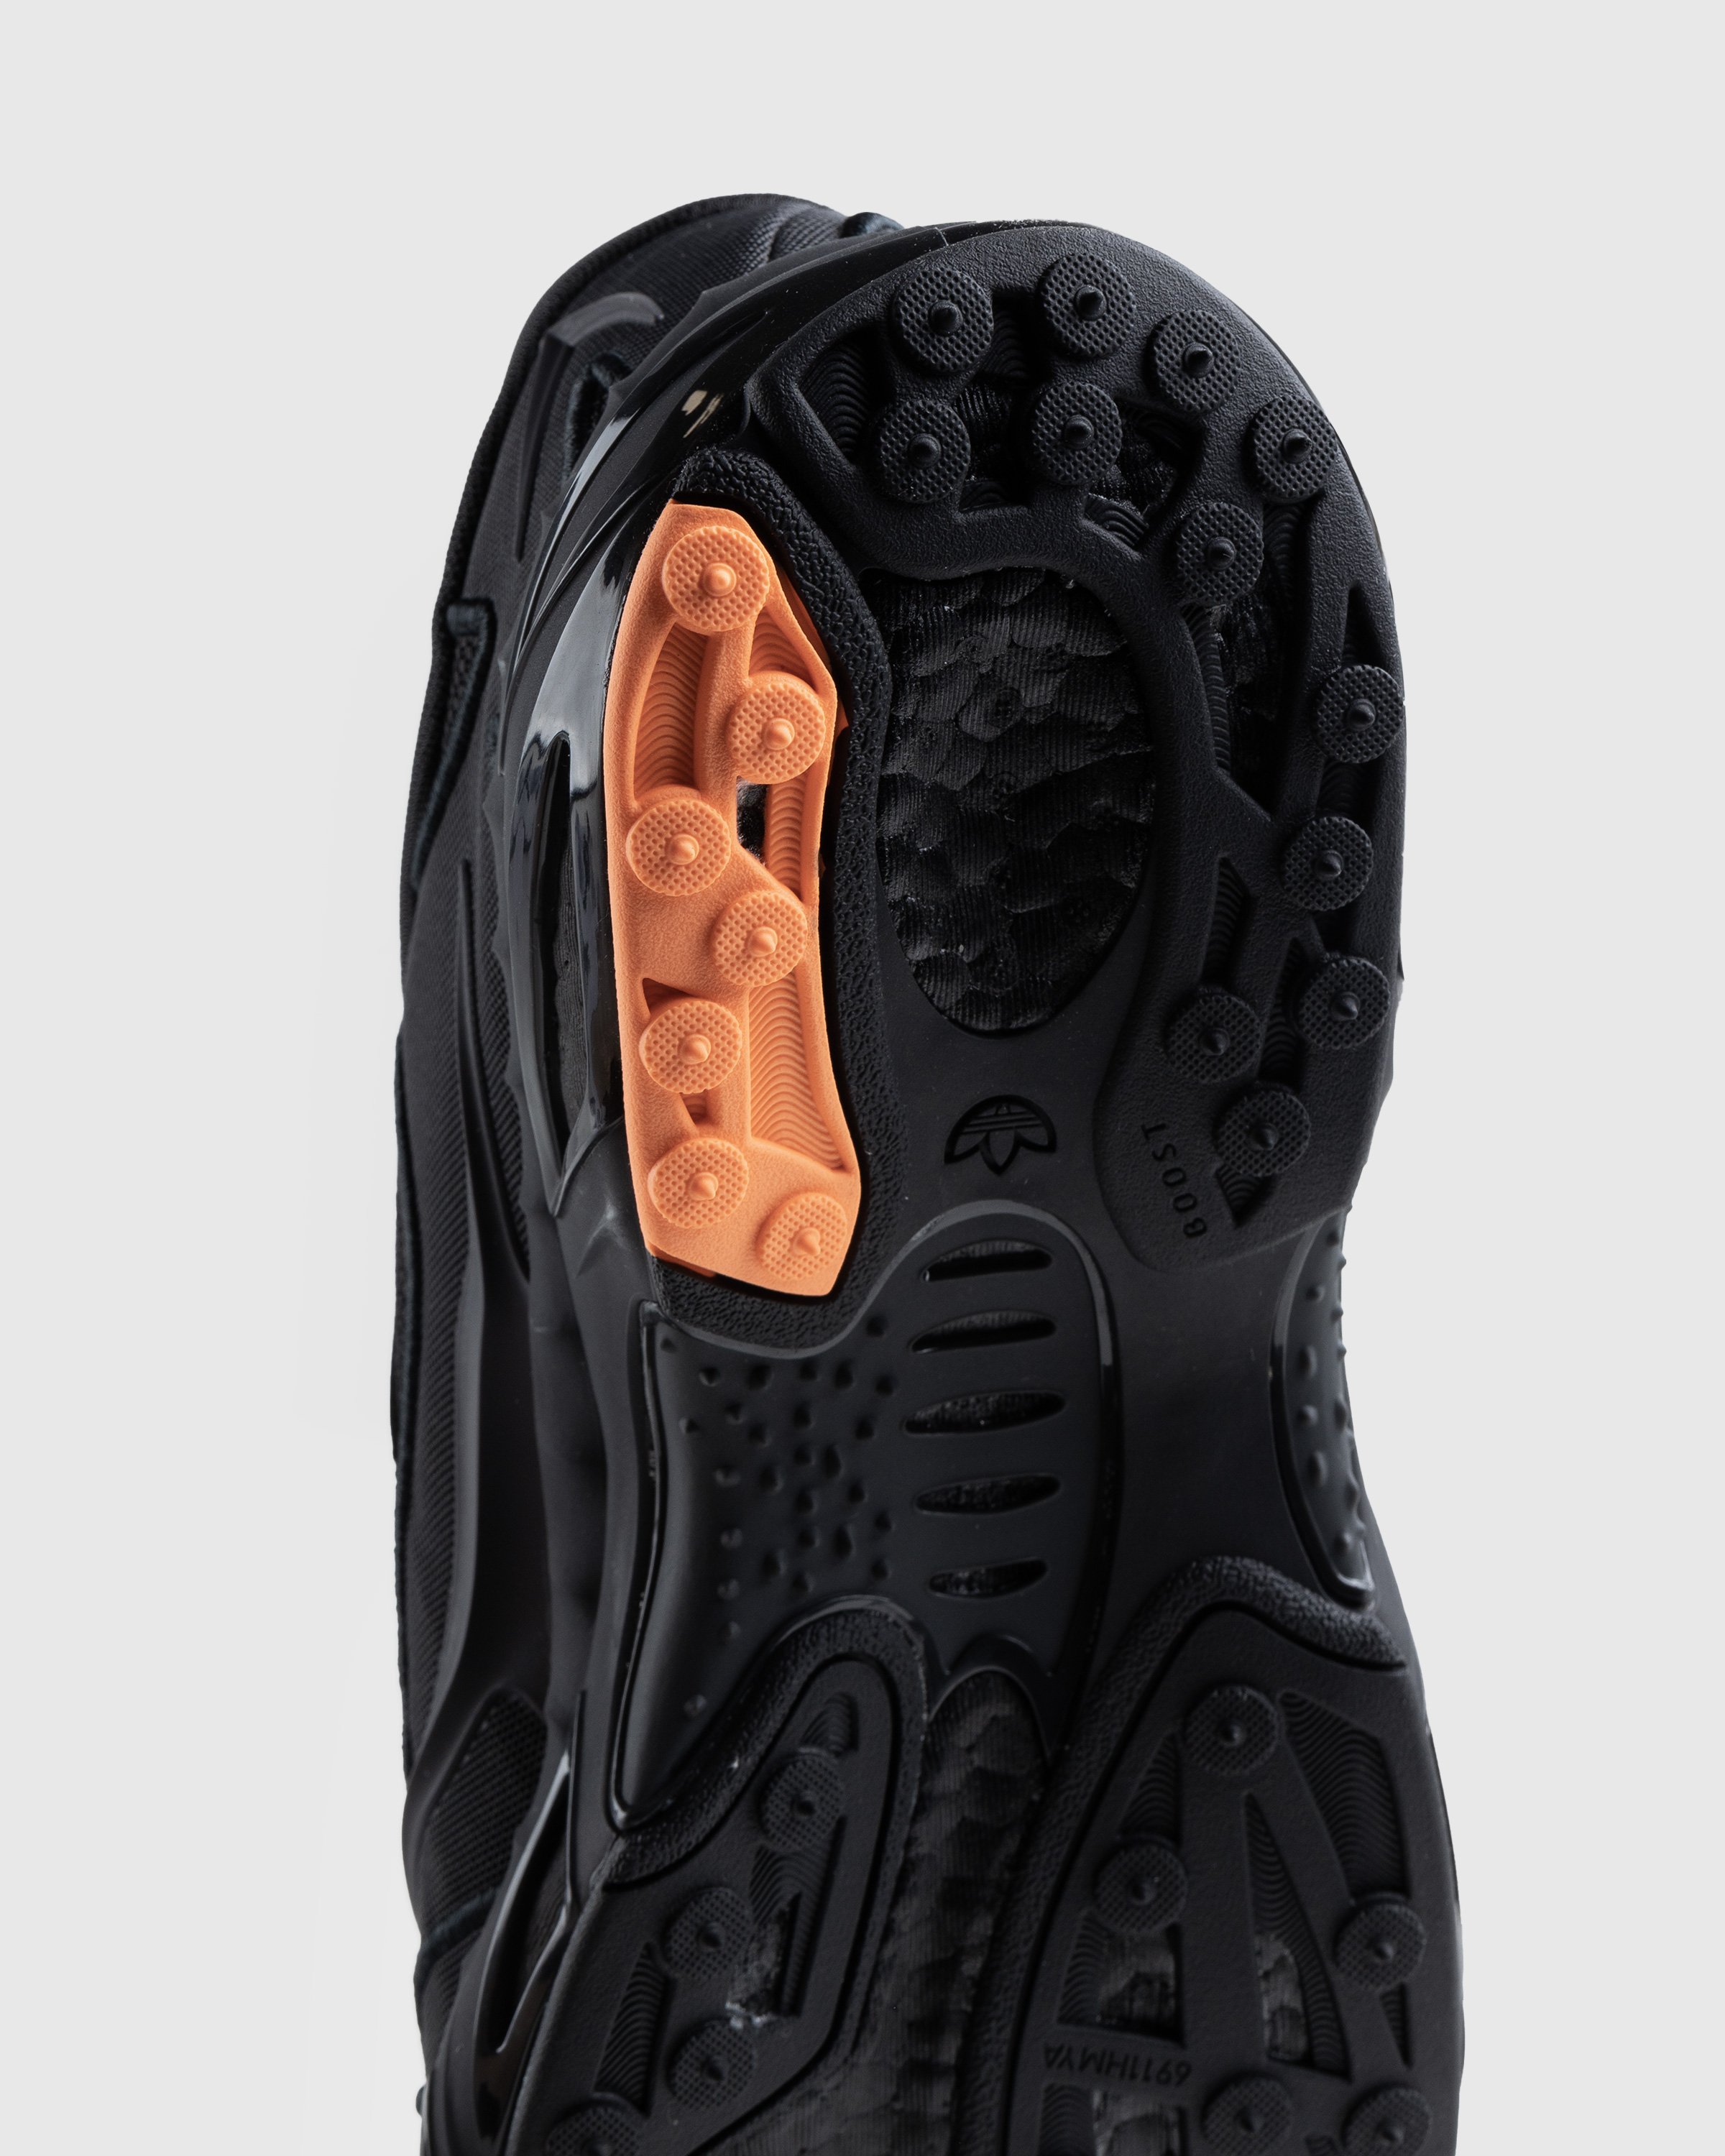 Adidas - Xare Boost Black - Footwear - Black - Image 6